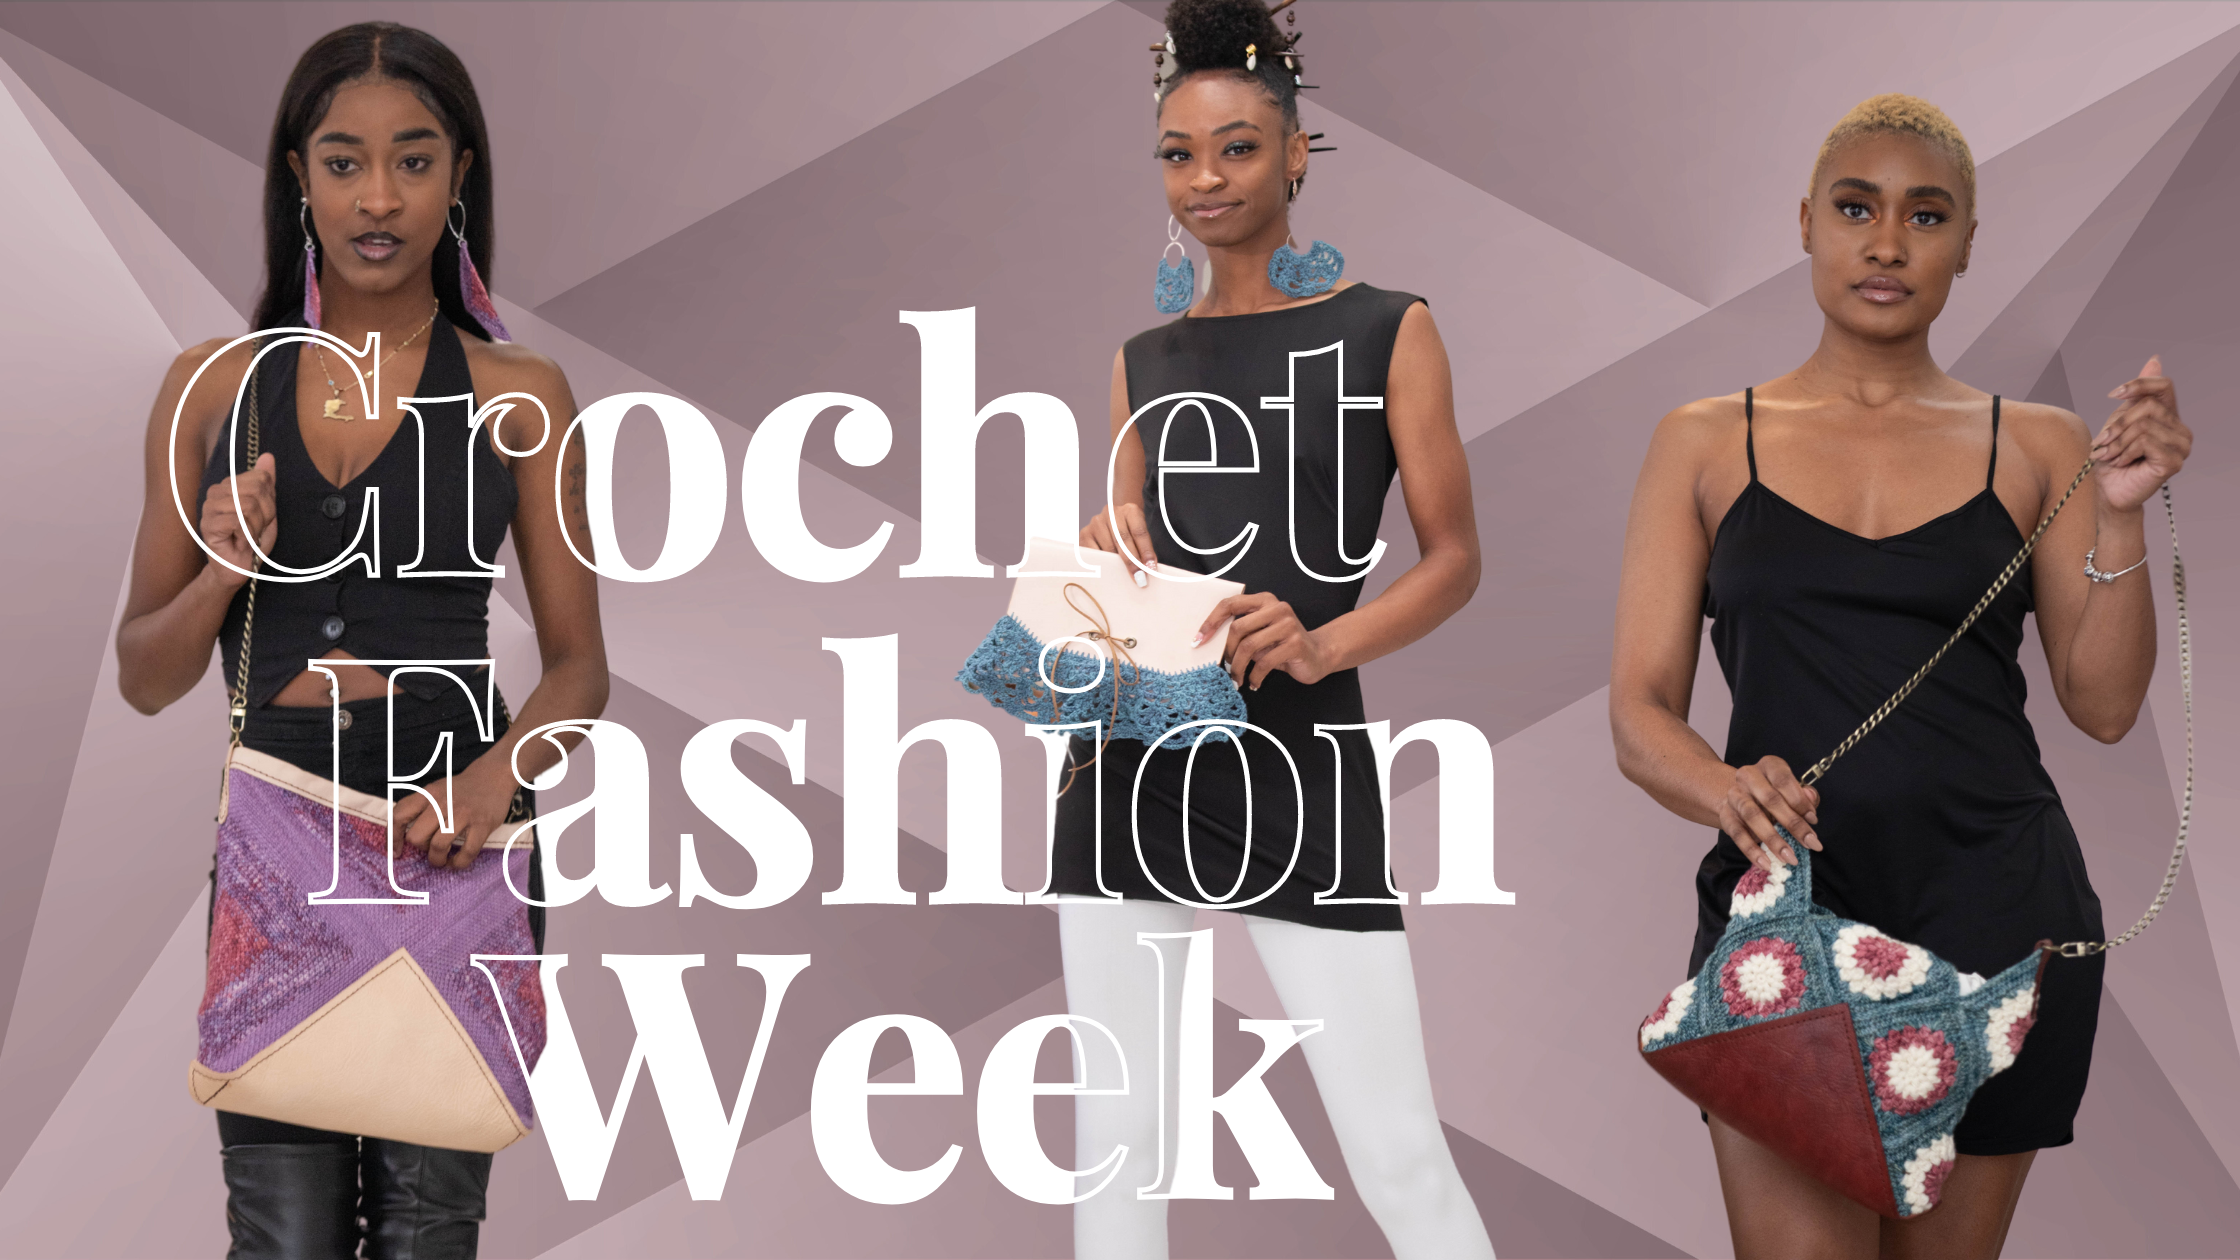 Crochet Fashion Week